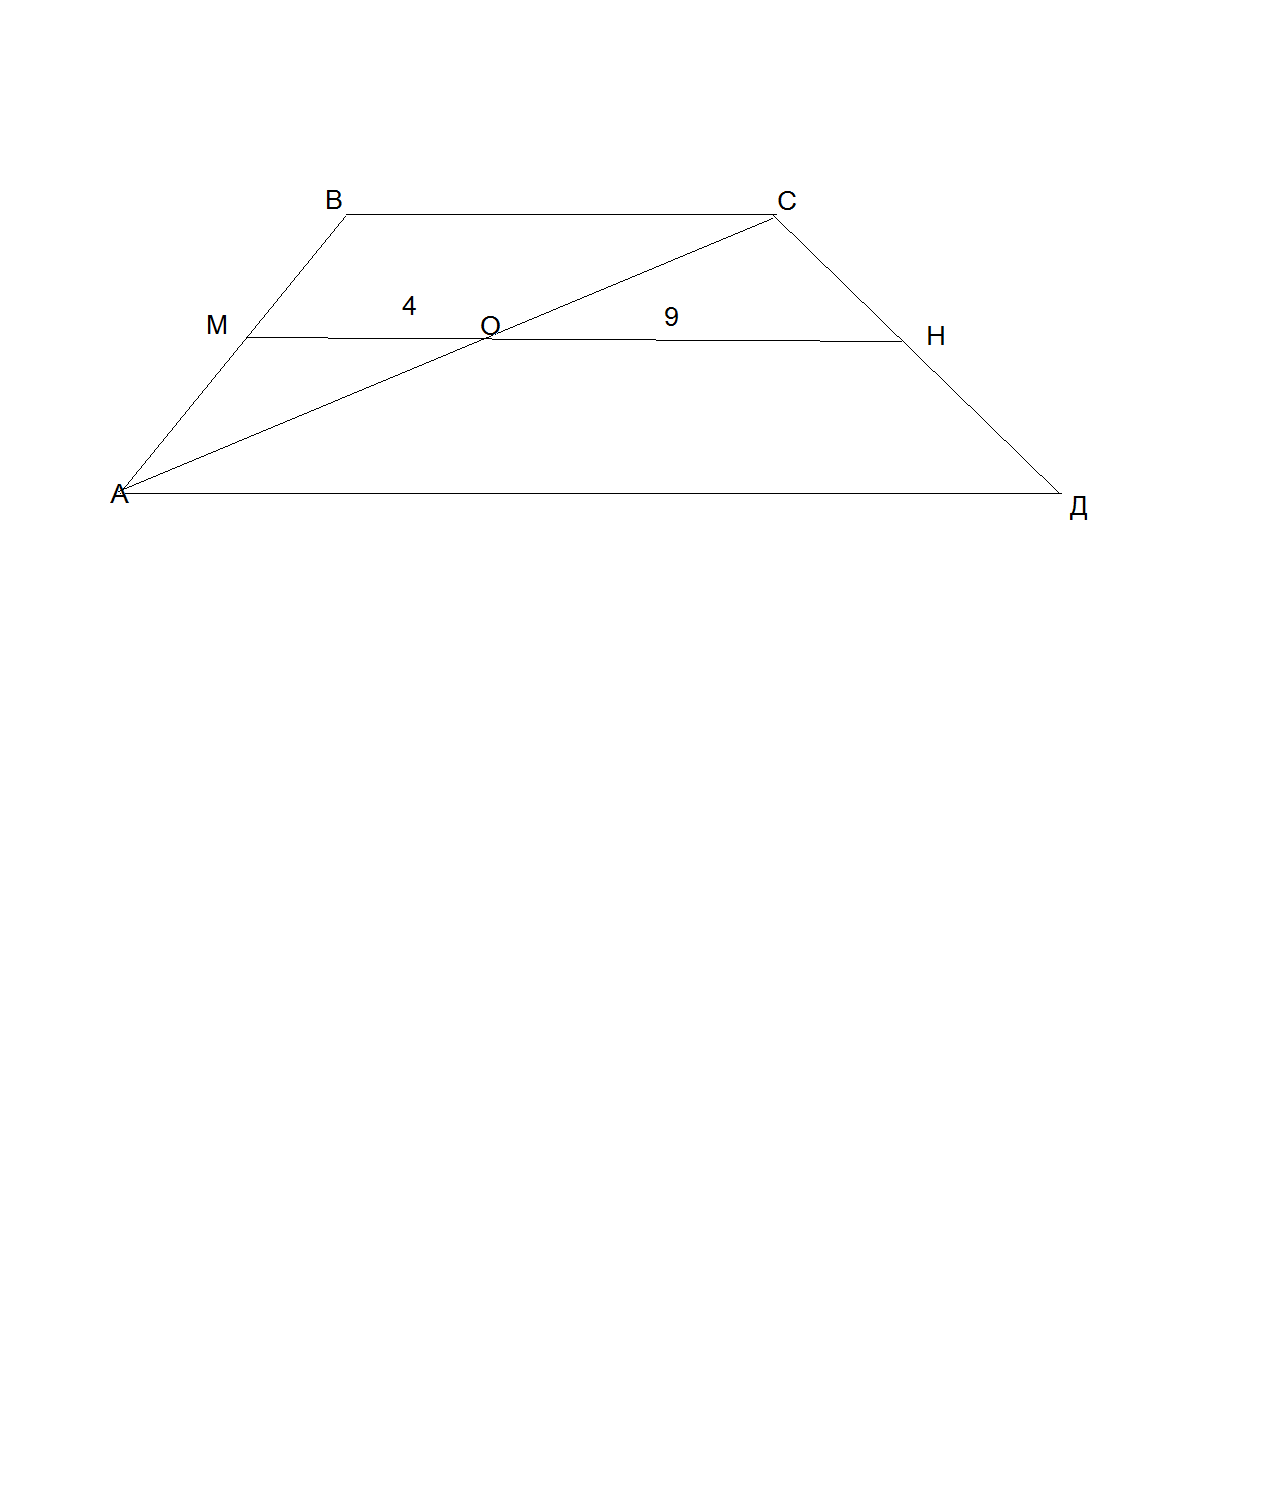 Диагонали трапеции делит трапецию на 4 треугольника. Диагональ трапеции делит. Диагональ трапеции делит среднюю линию. Диагональ делит среднюю линию трапеции на отрезки. Диагональ трапеции делит среднюю линию на два отрезка 4 и 9.